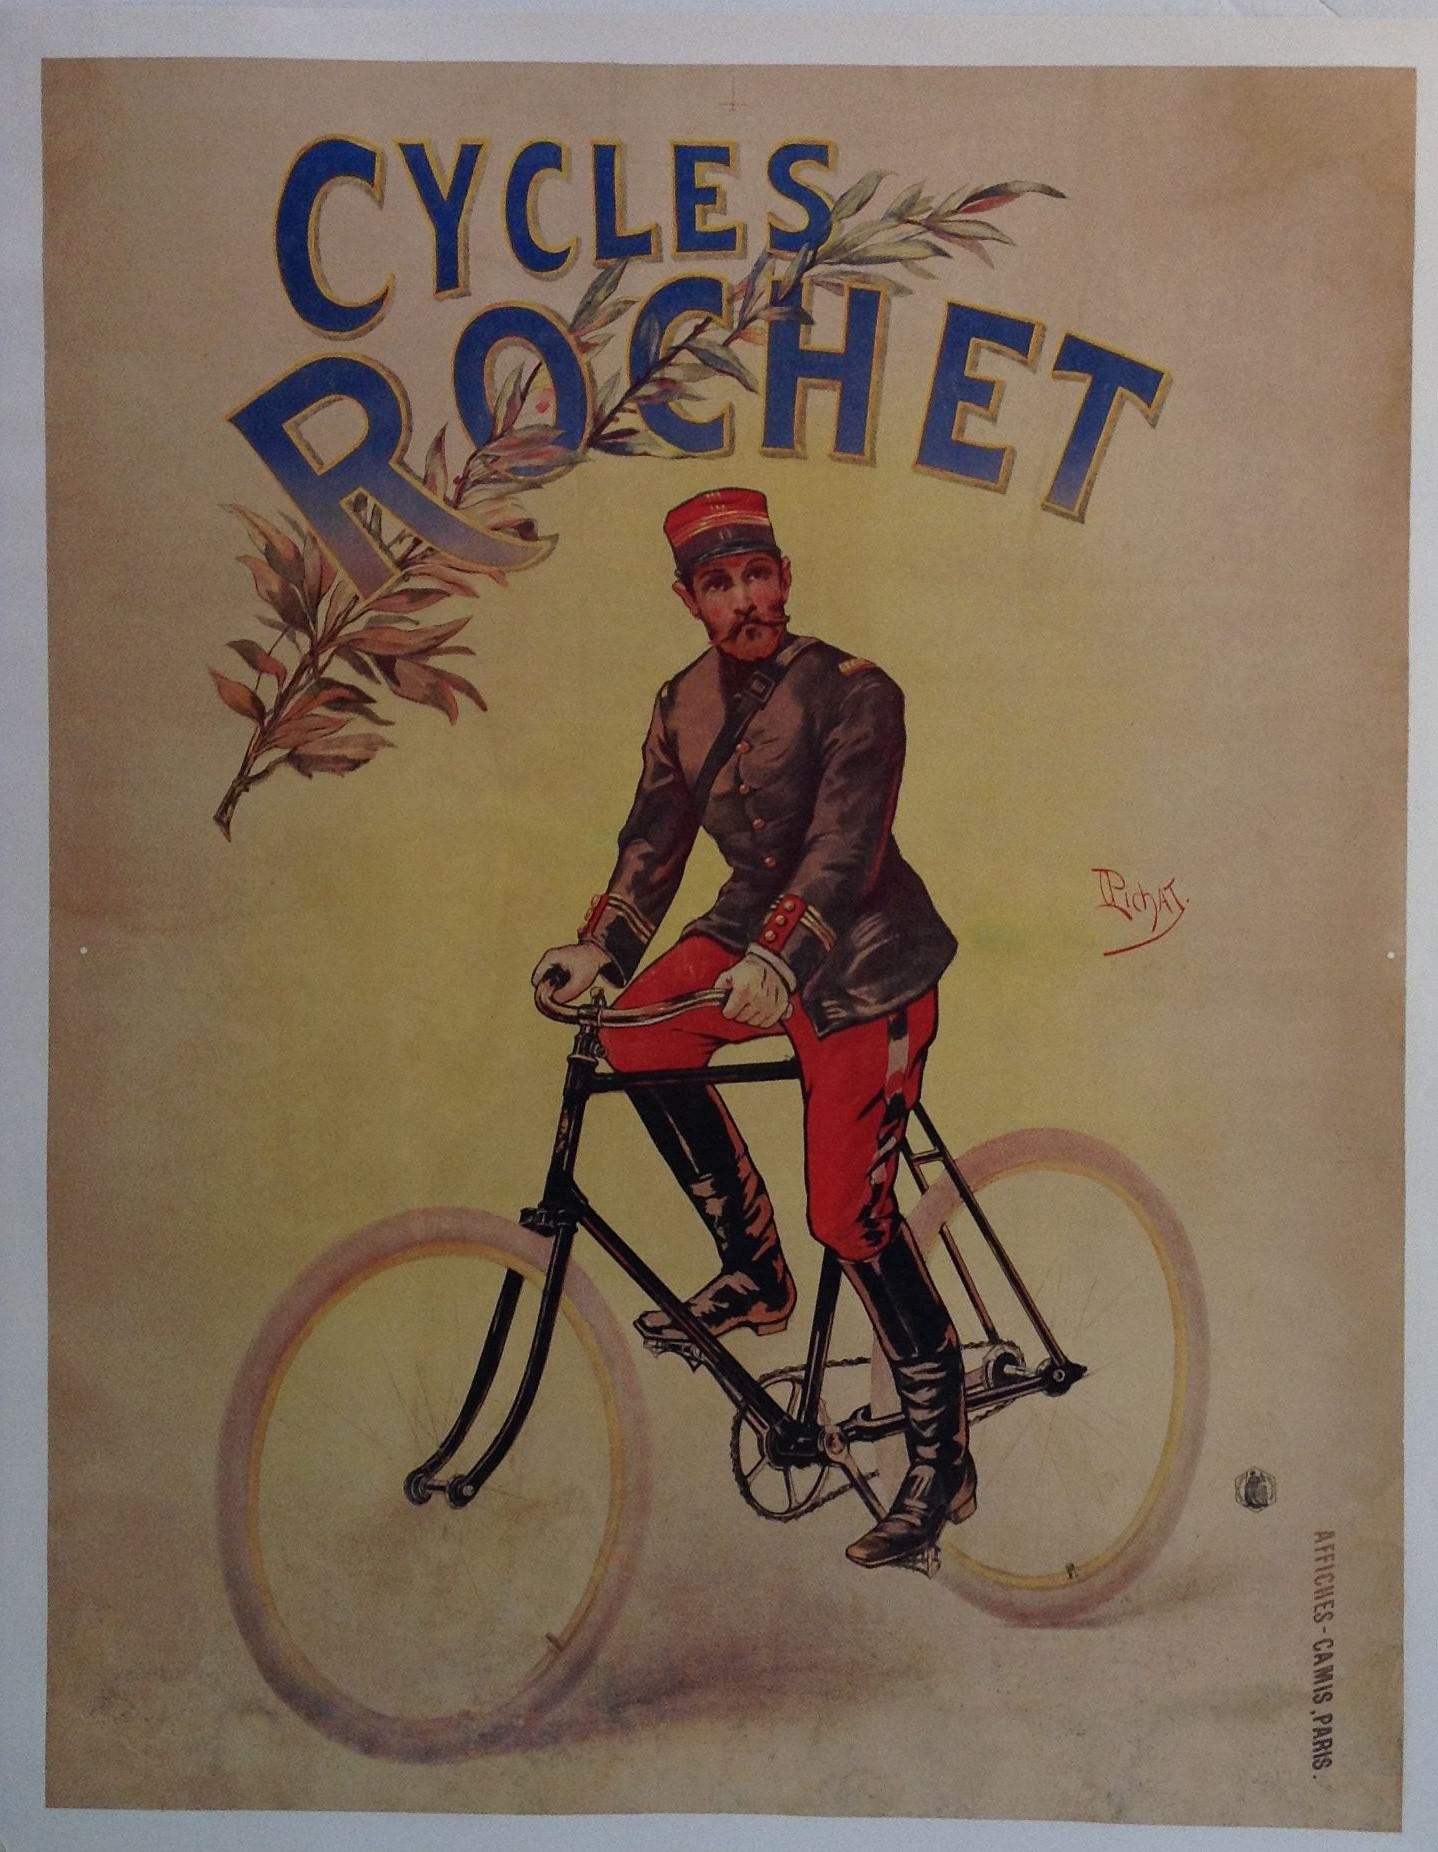 Cycles Rochet